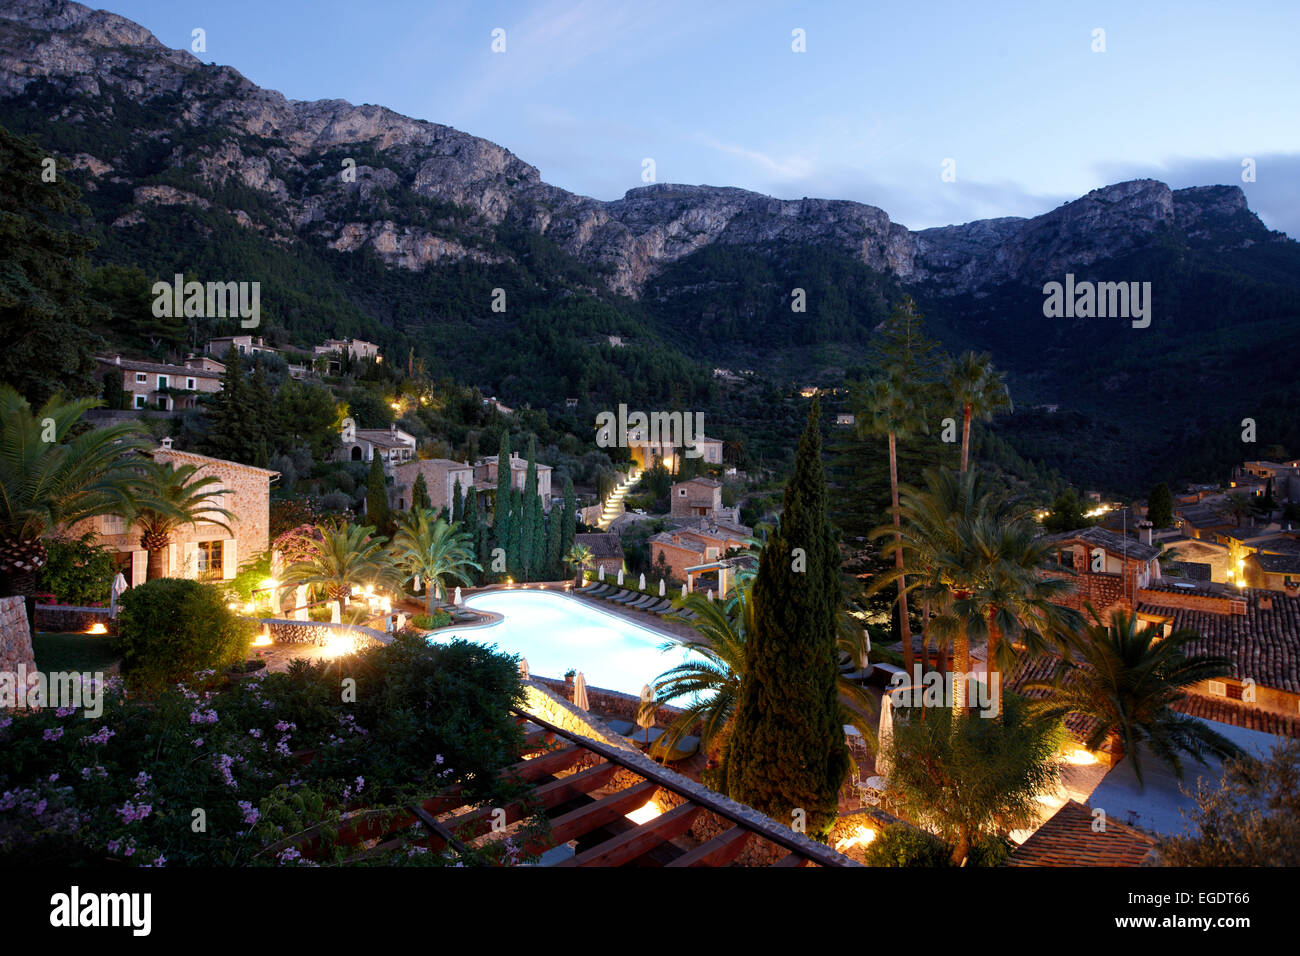 View over a hotel to Serra de Tramuntana in background, Deia, Majorca, Spain Stock Photo